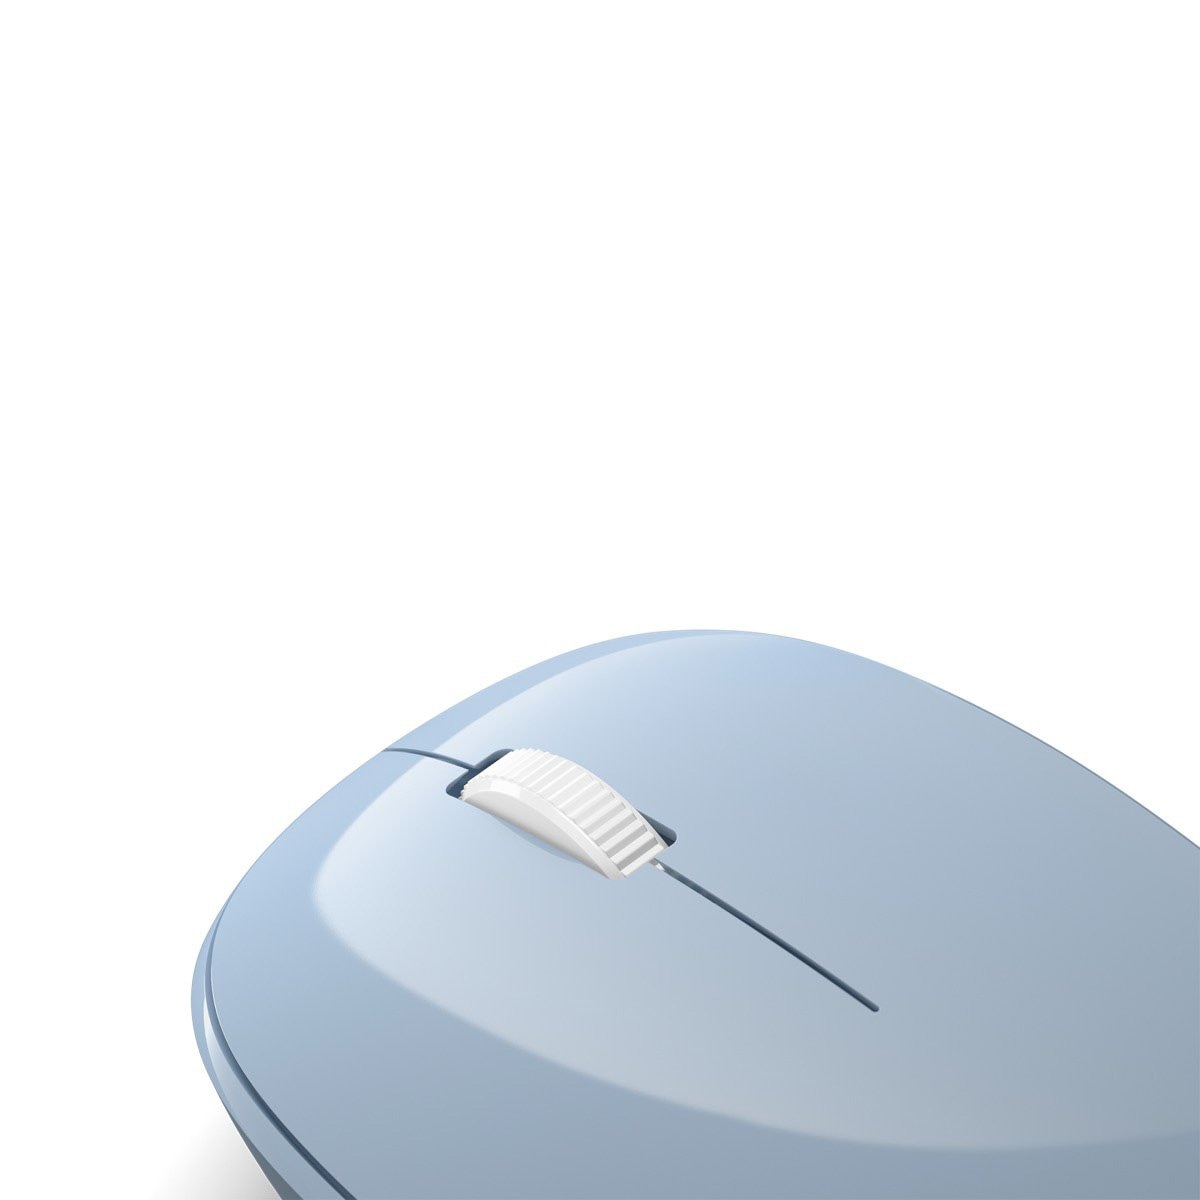 Mouse Bluetooth Azul Pastel Microsoft